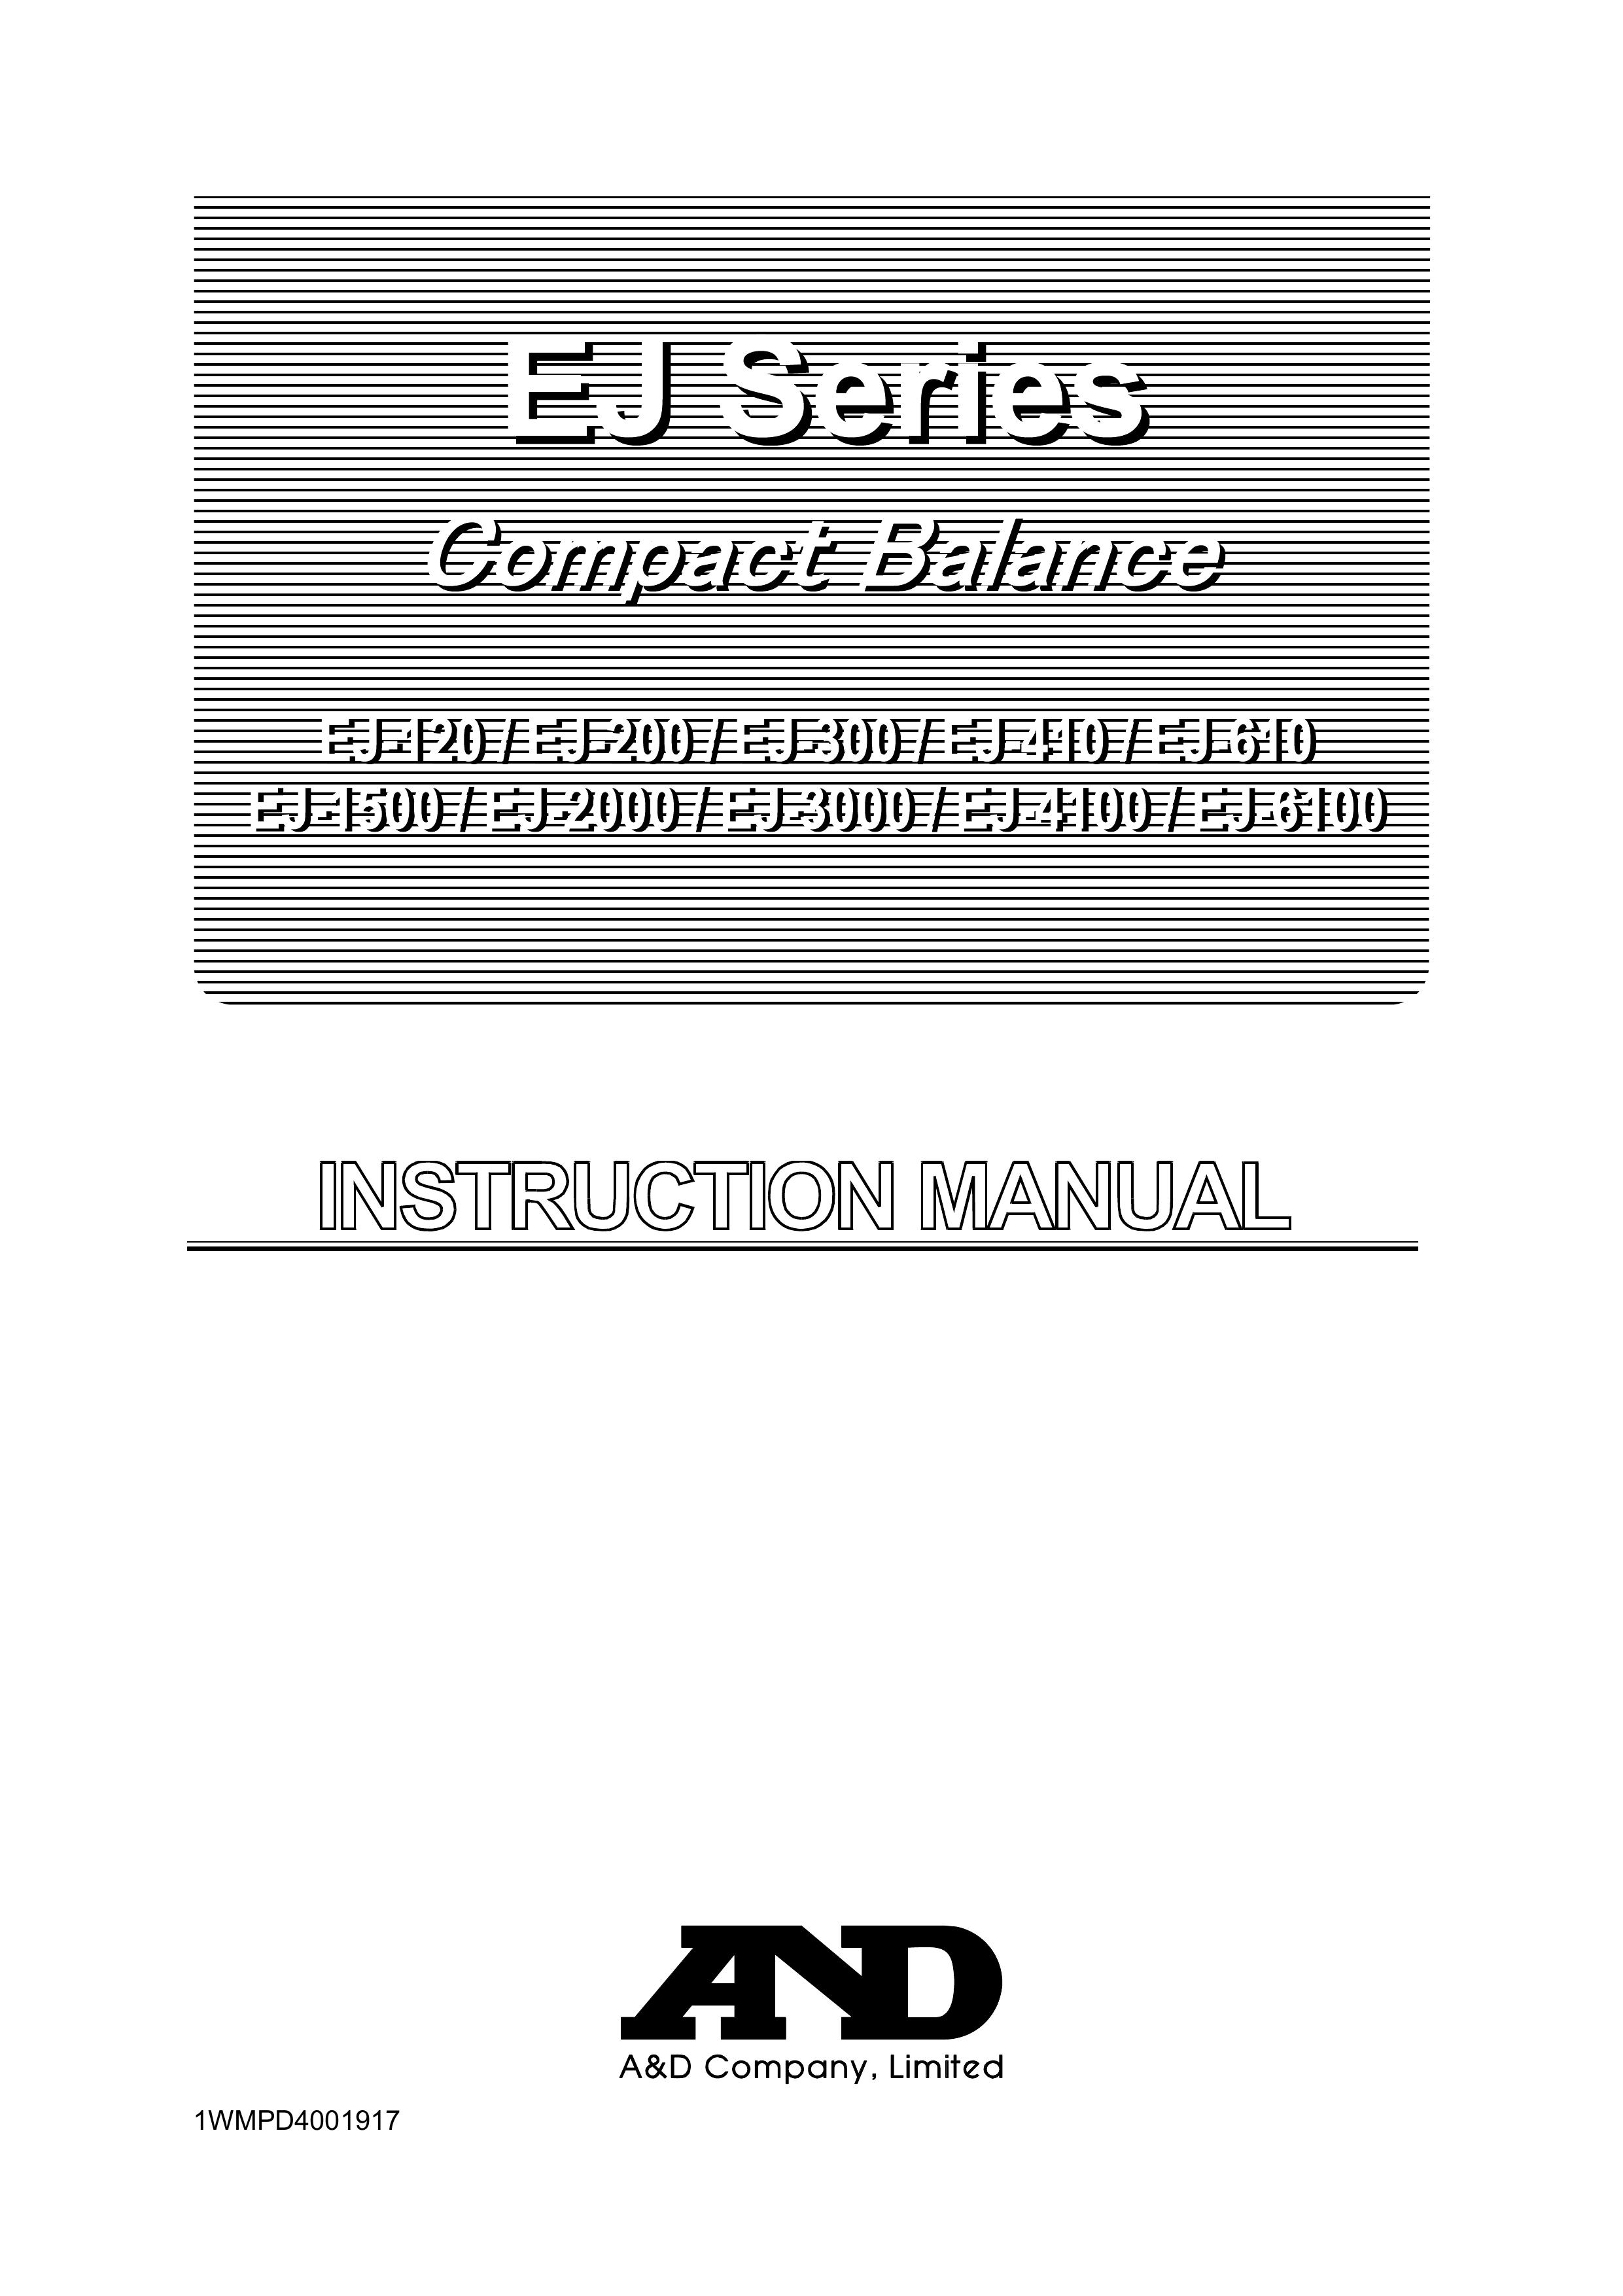 A&D EJ-6100 Scale User Manual